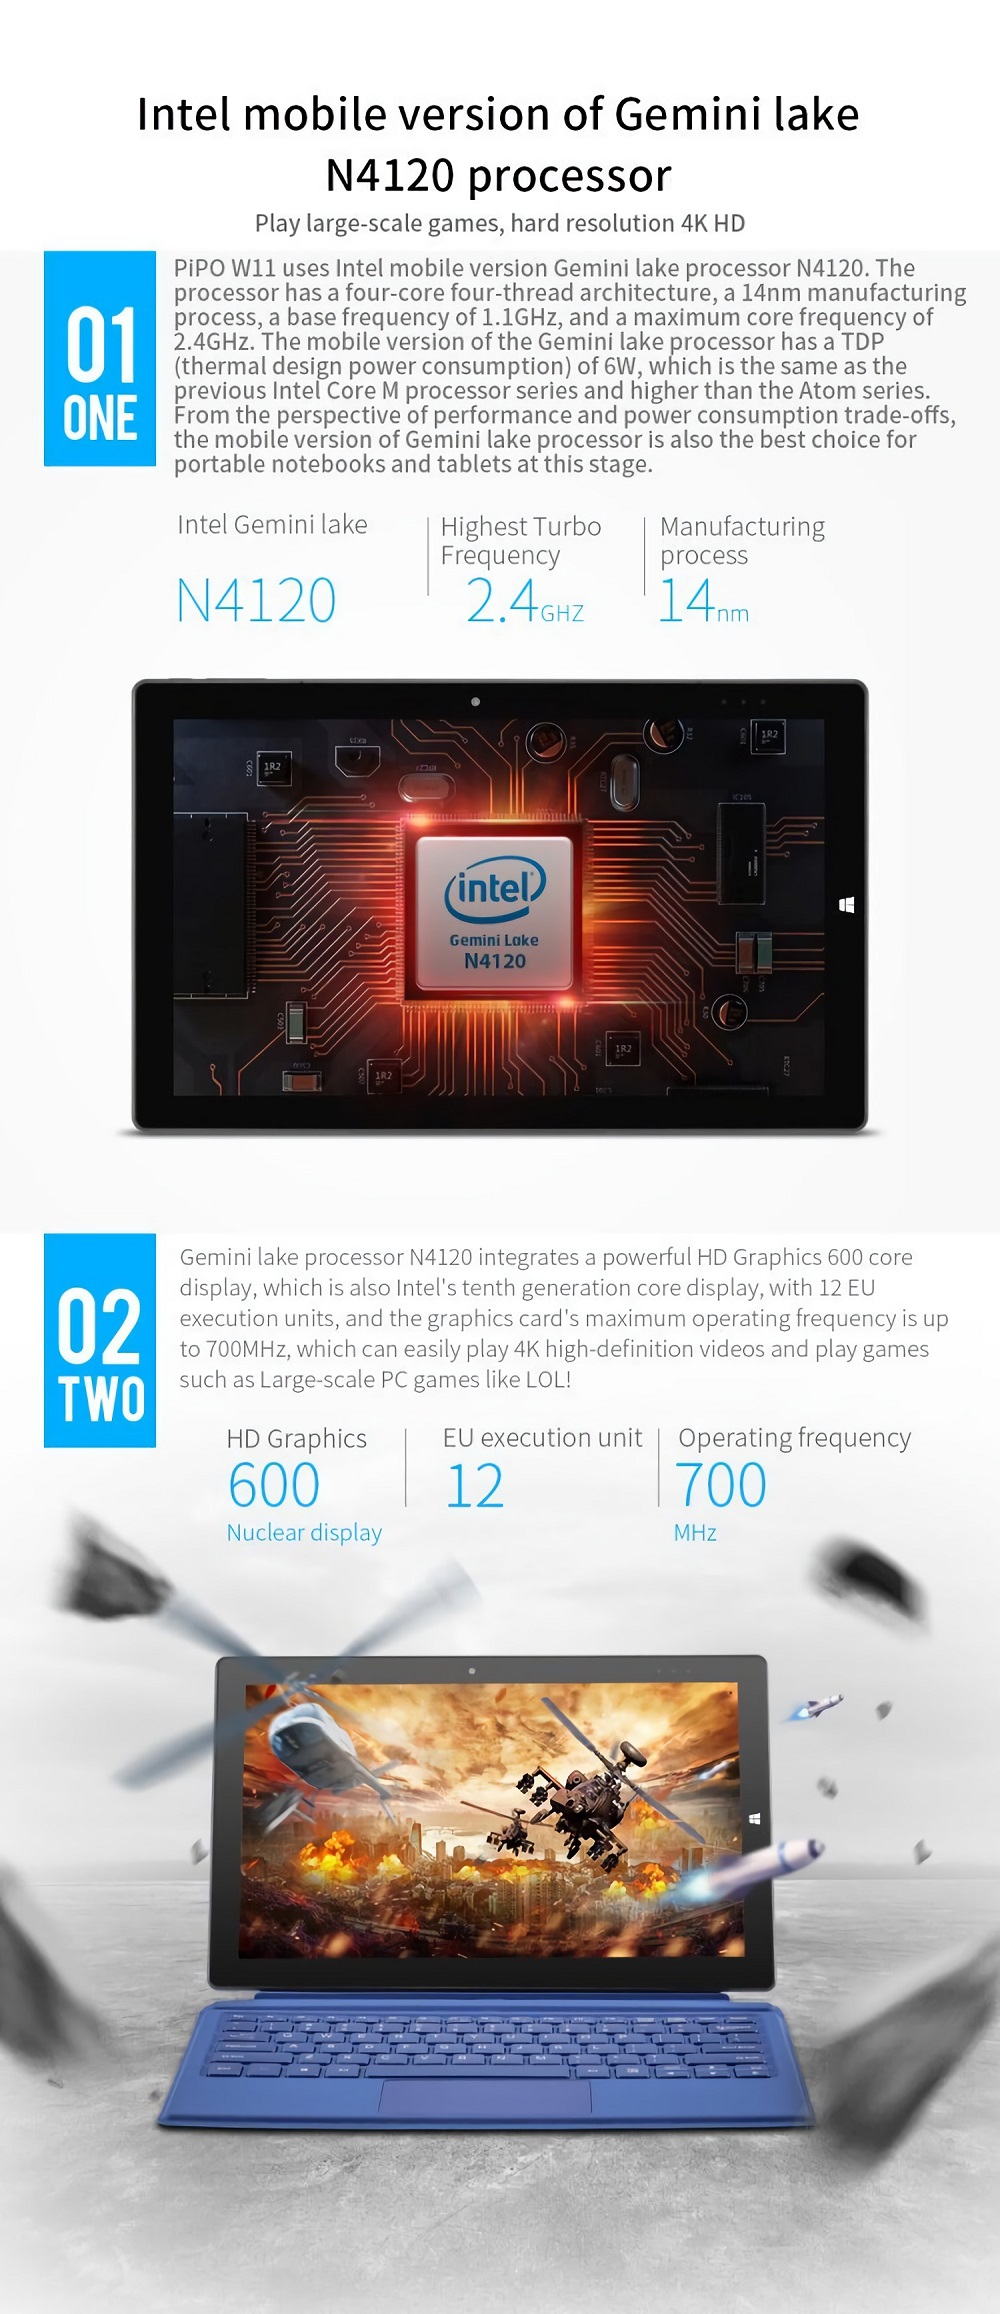 PIPO W11 Intel Gemini Lake N4120 8GB RAM 128GB ROM 11.6 Inch Windows 10 Tablet with Keyboard Stylus Pen 47